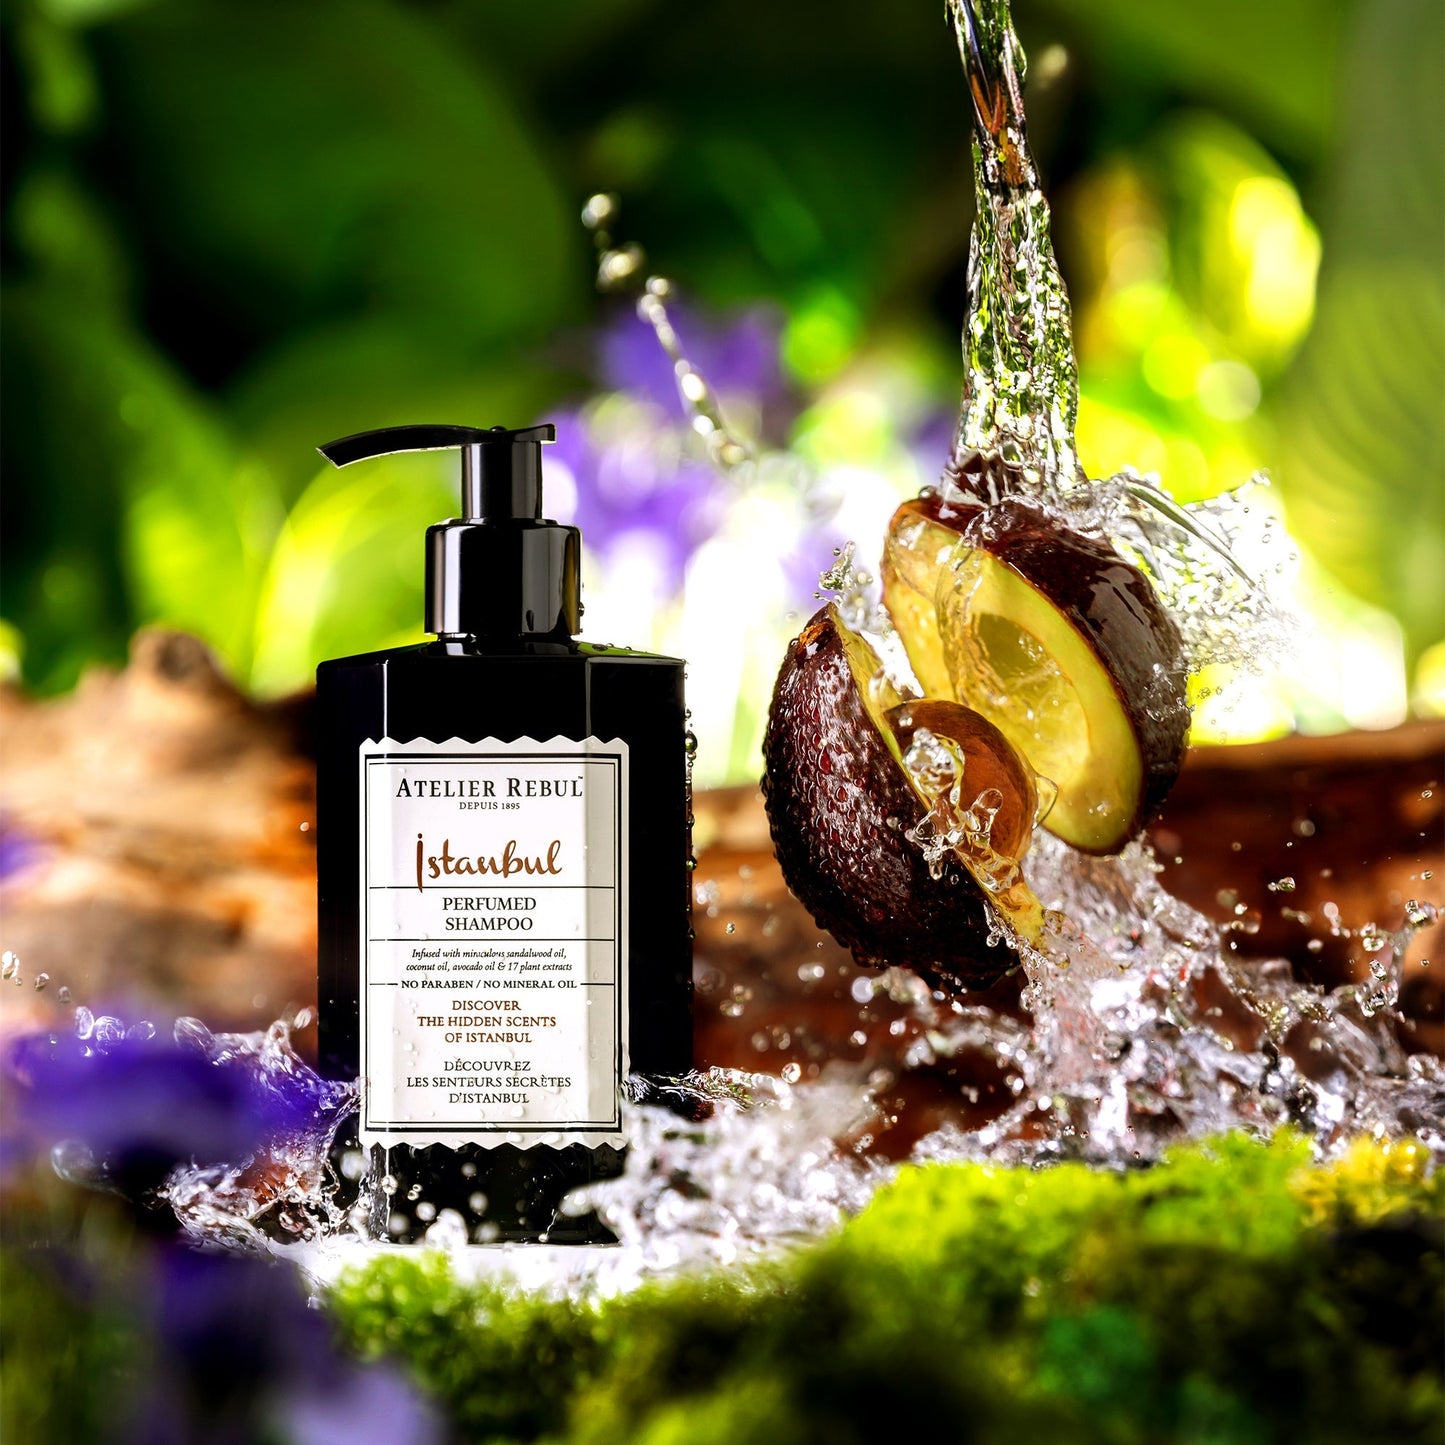 Atelier Rebul Istanbul Perfumed Shampoo 250ml